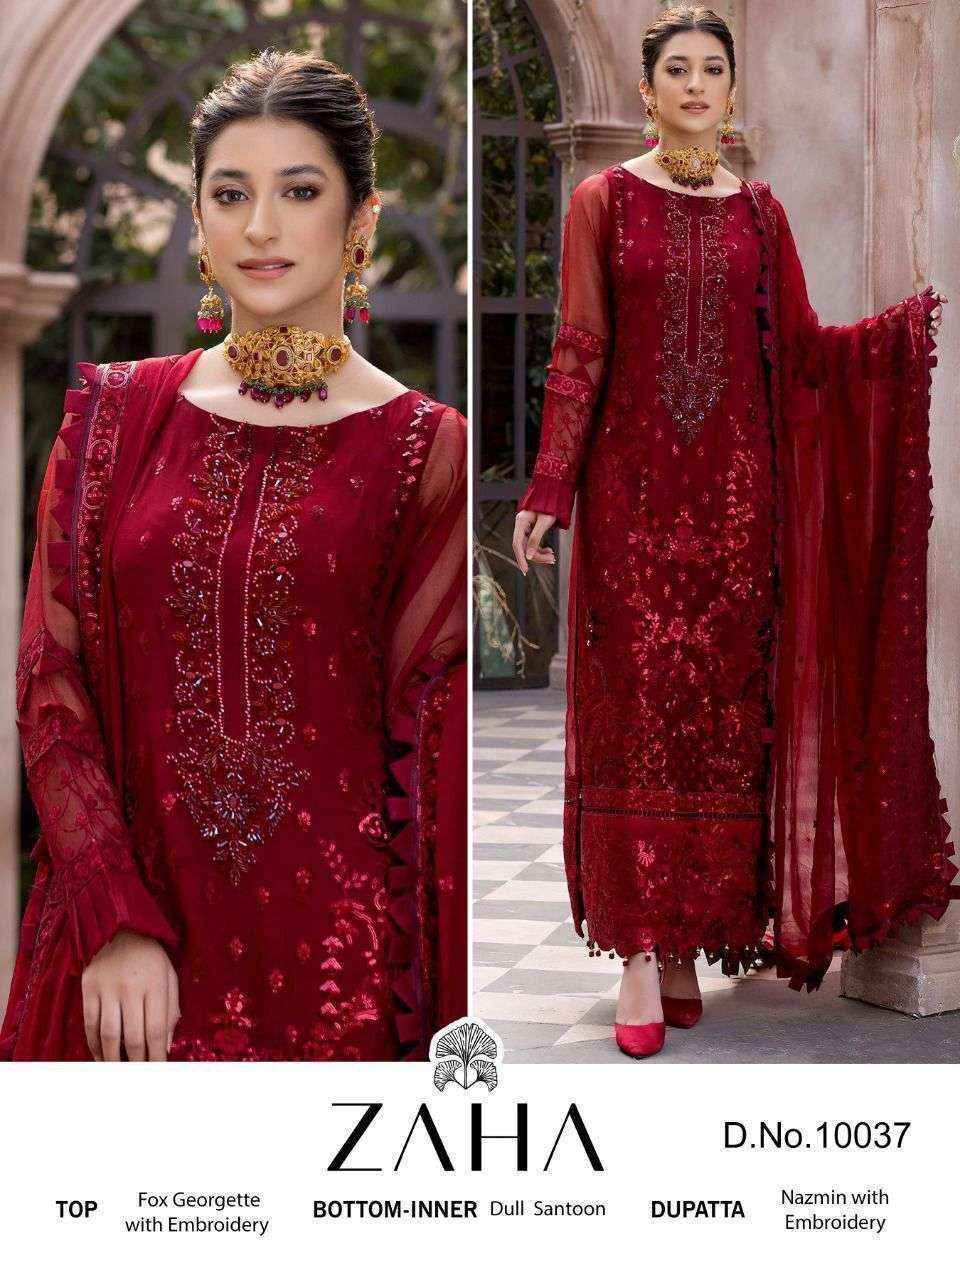 Zaha Inaya Vol 2 Georgette Dress Material 5 pcs Catalogue